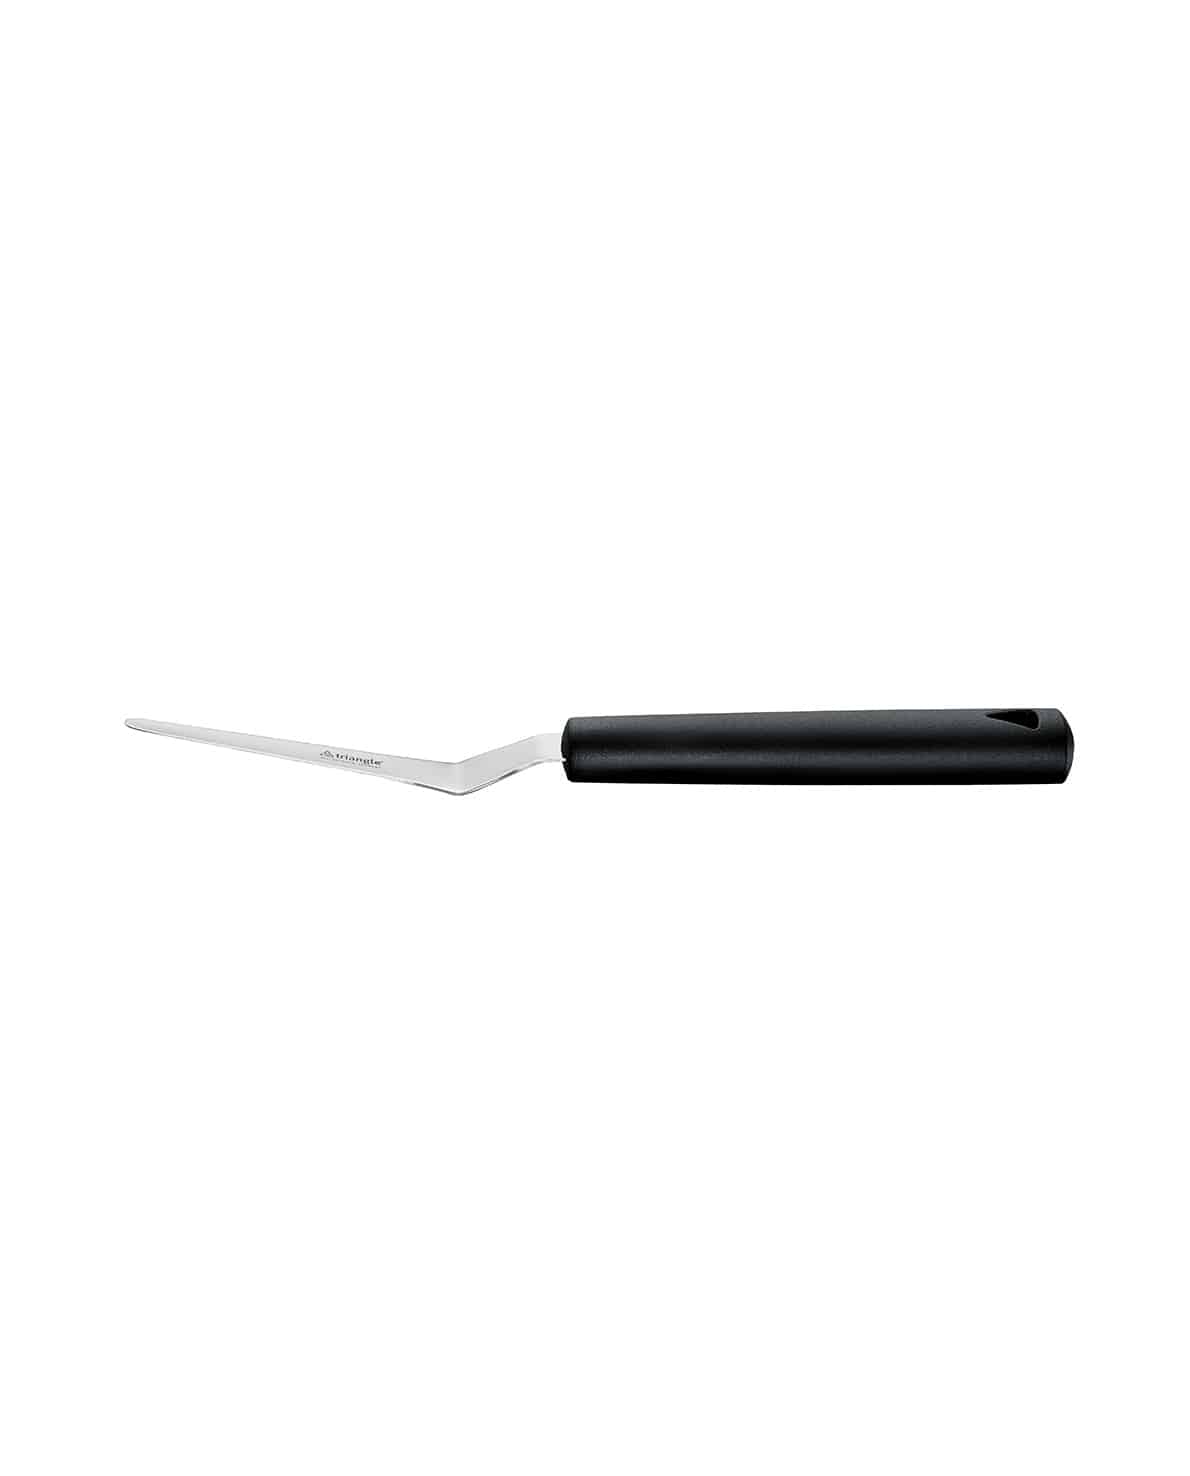 Confiserie spatula spirit, cranked, 7,5 cm - 72 508 08 00